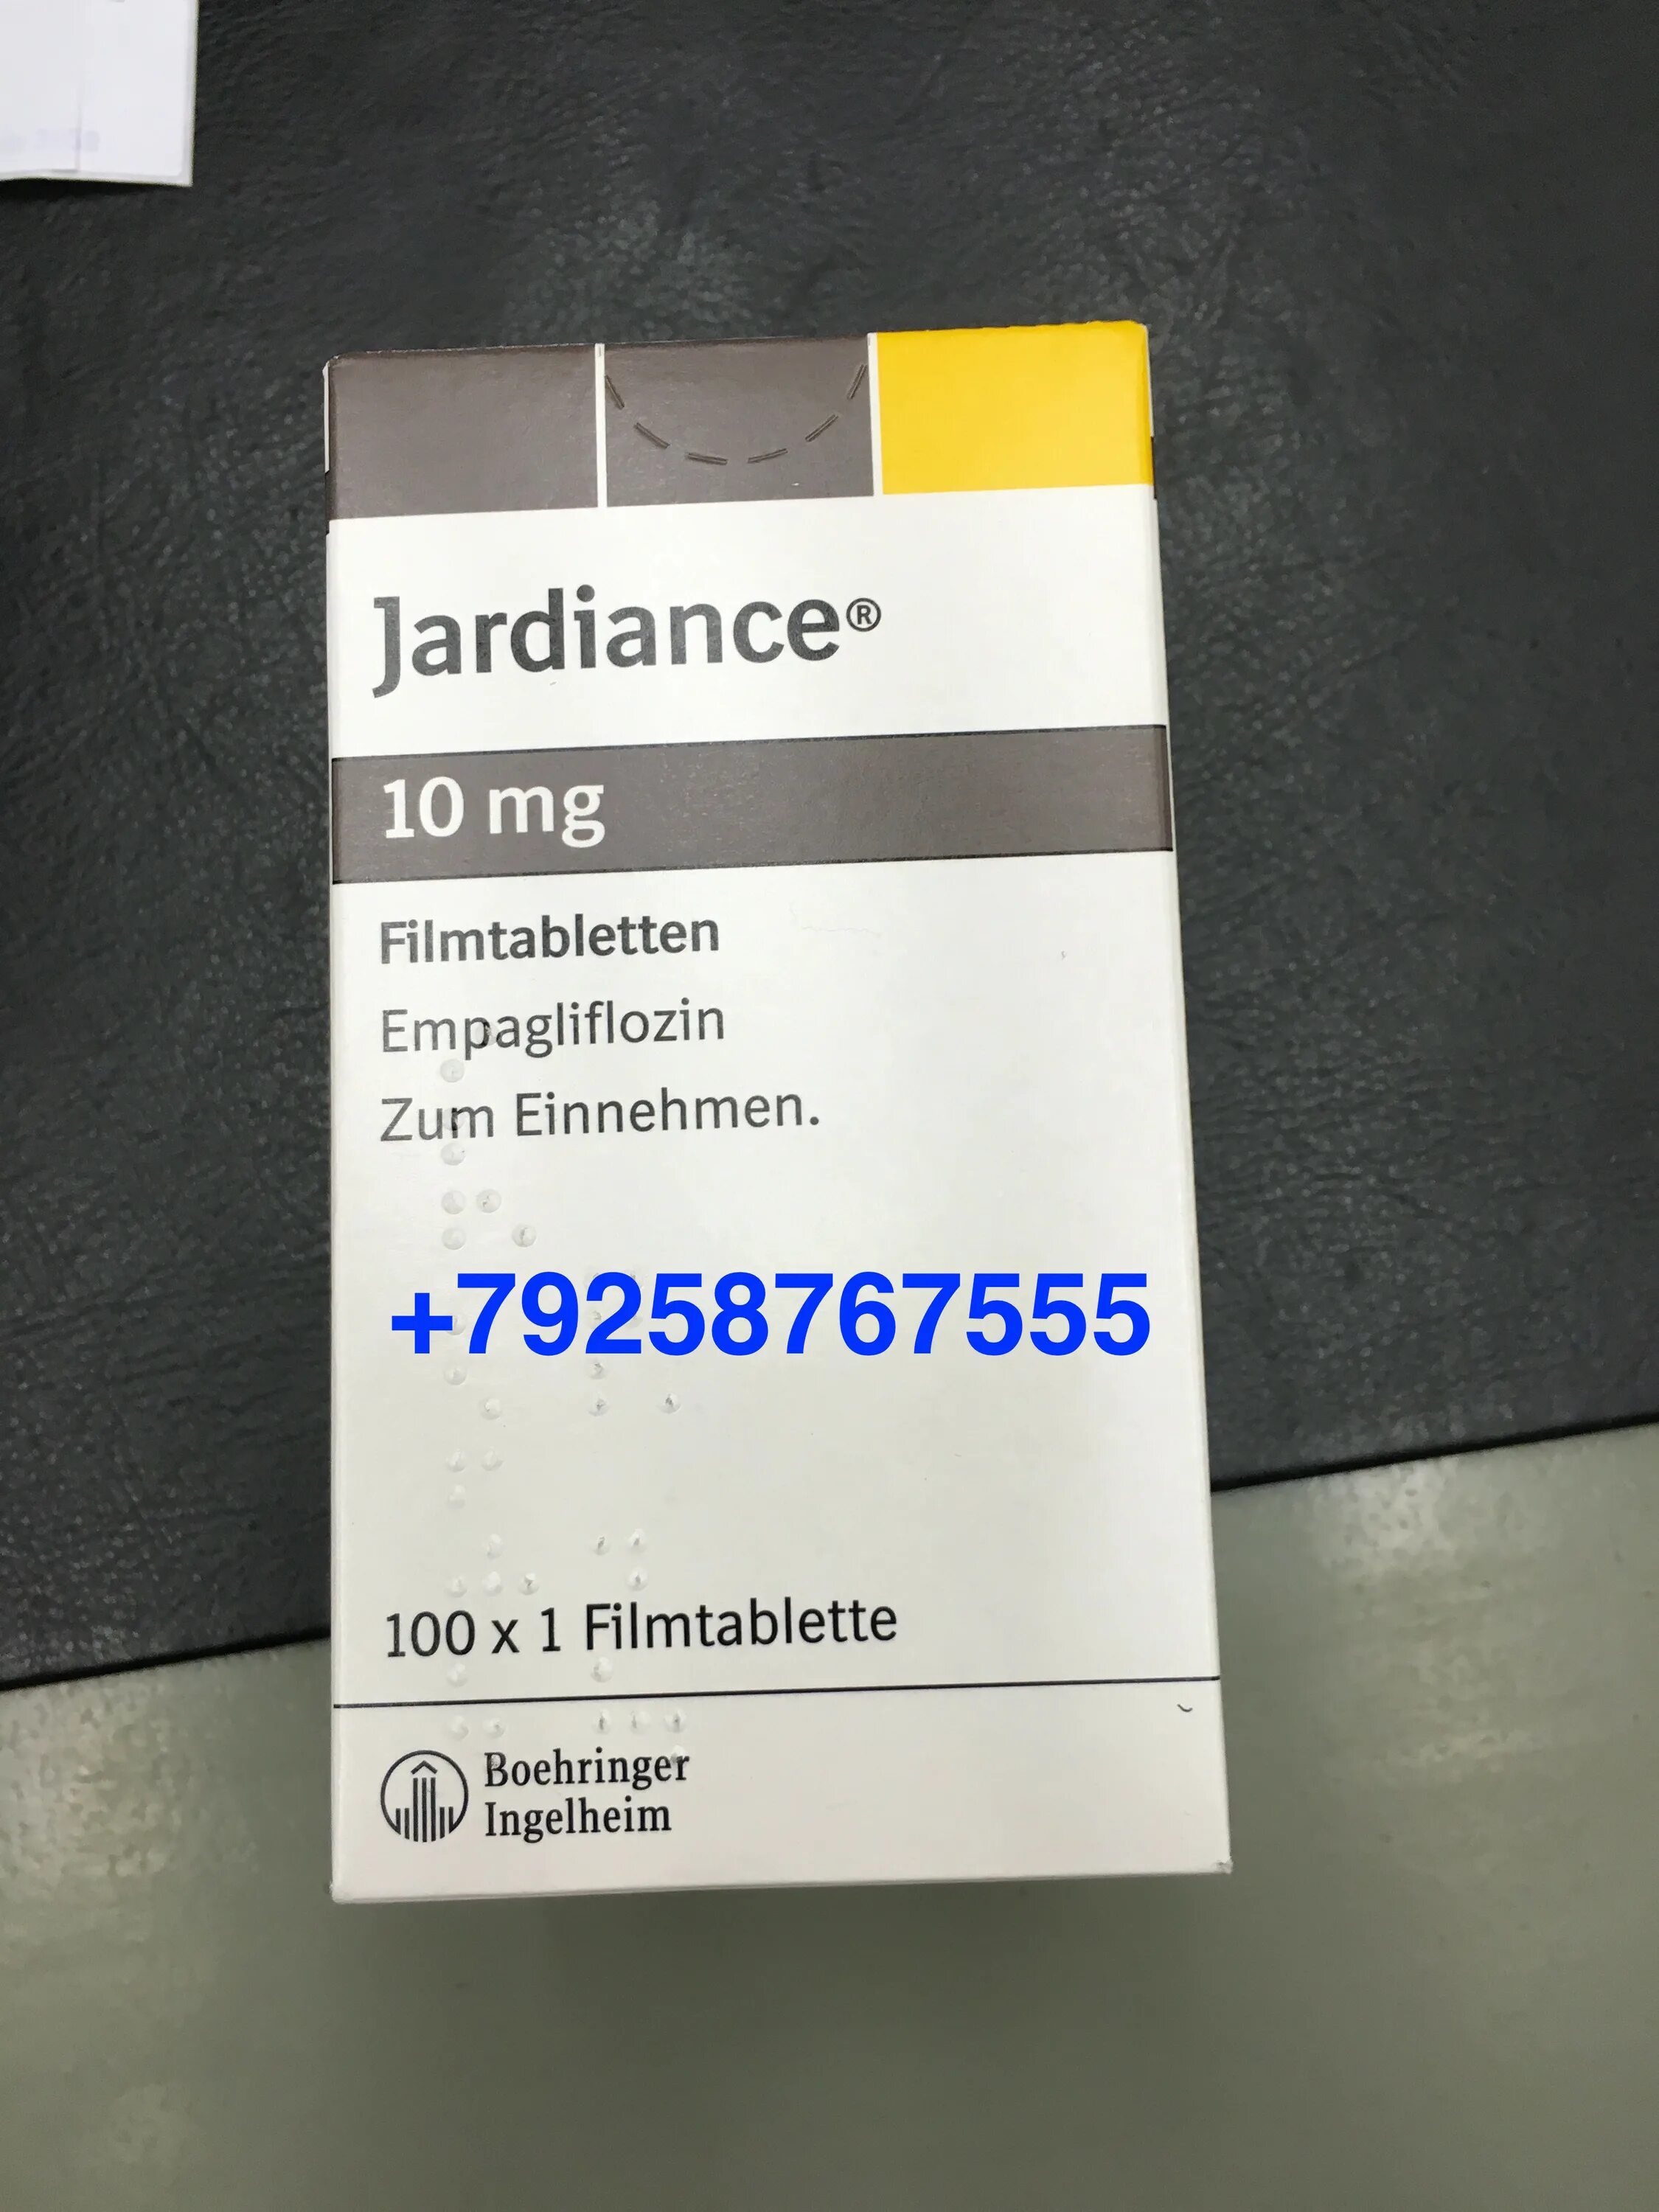 Таблетки Джардинс 25 мг. Эмпаглифлозин Джардинс 25 мг. Таблетки Джардинс 10 мг. Джардинс 25мг 30т. Джардинс отзывы врачей